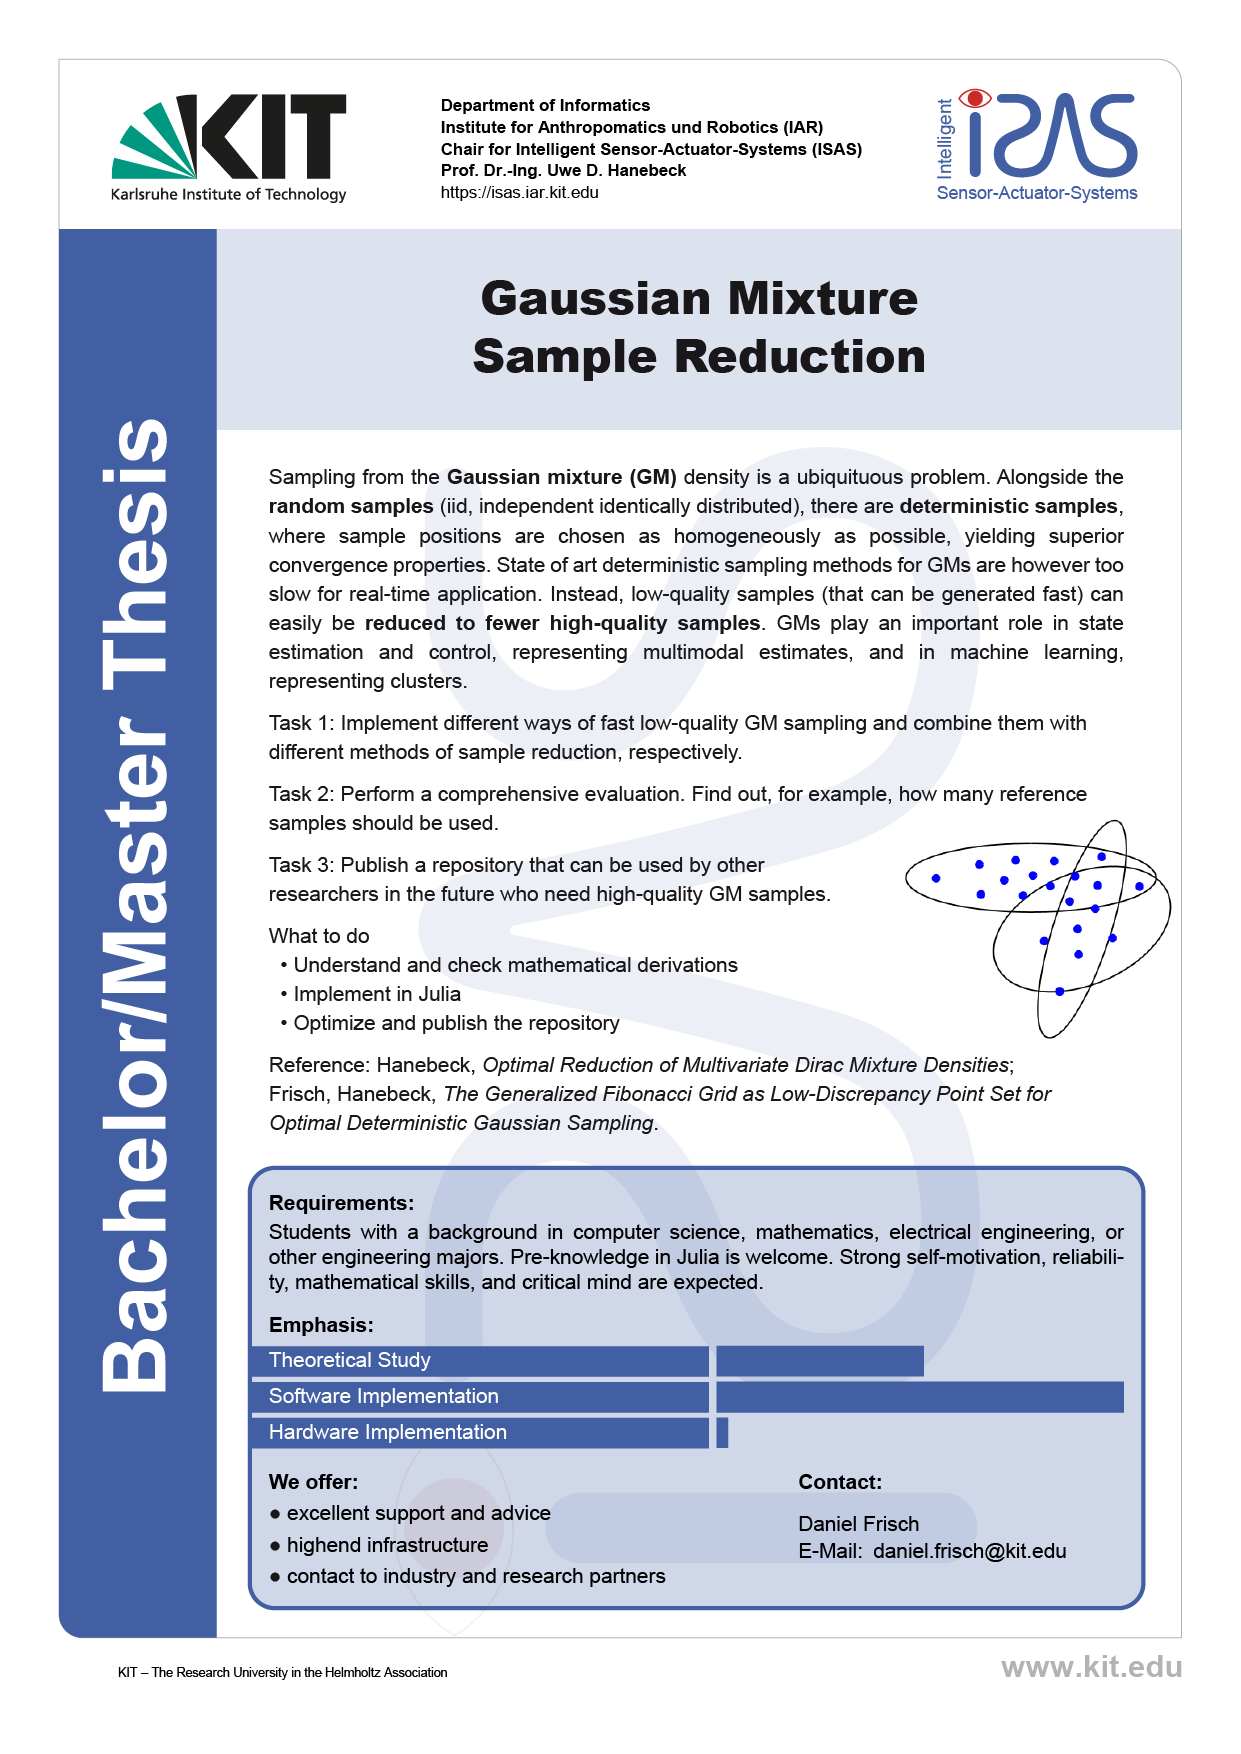 Gaussian Mixture Sample Reduction